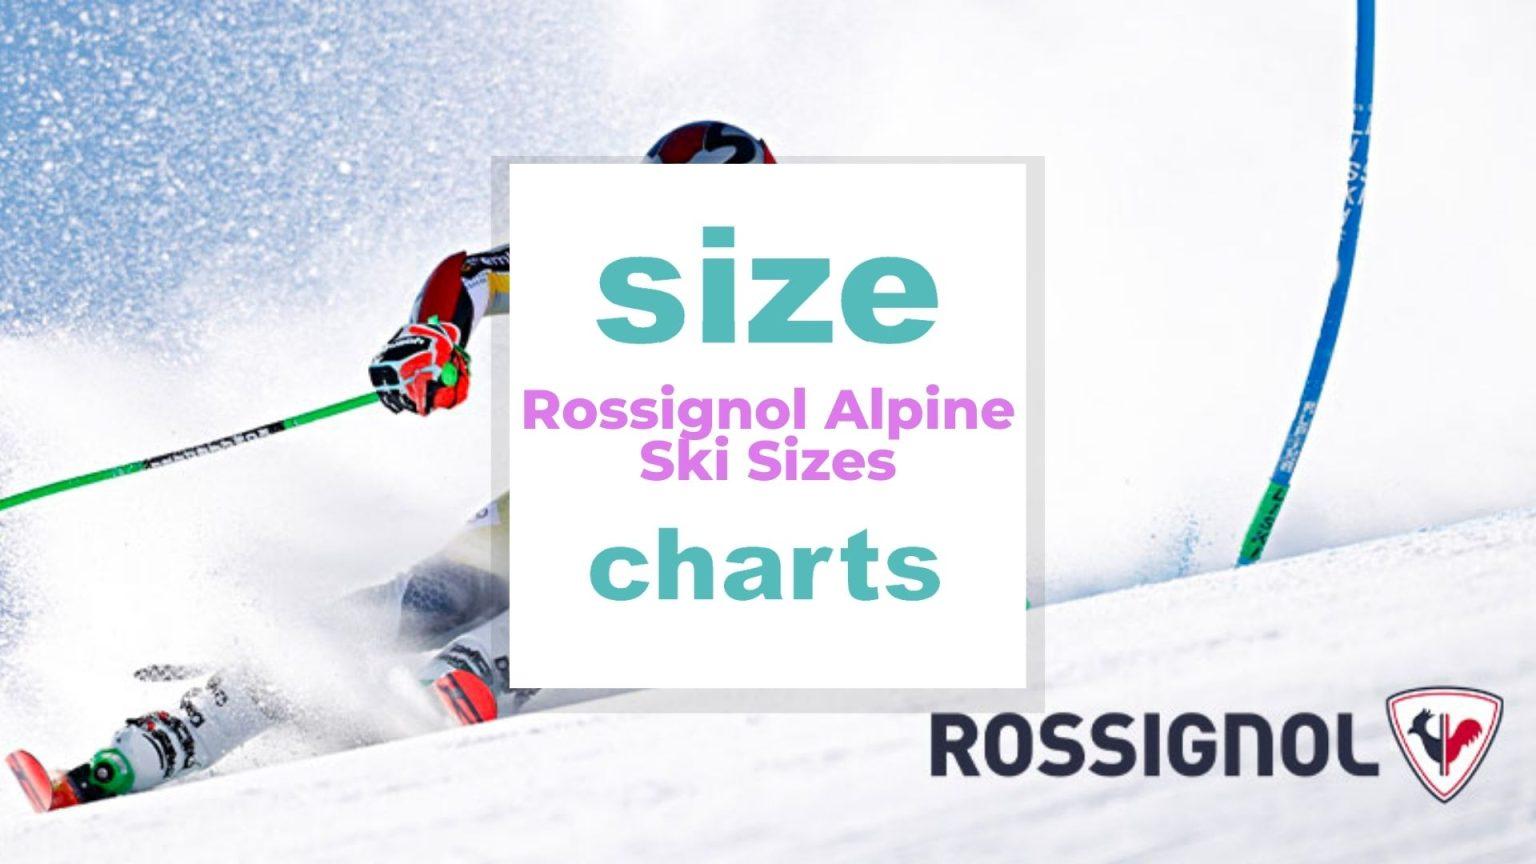 rossignol-alpine-ski-sizes-size-charts